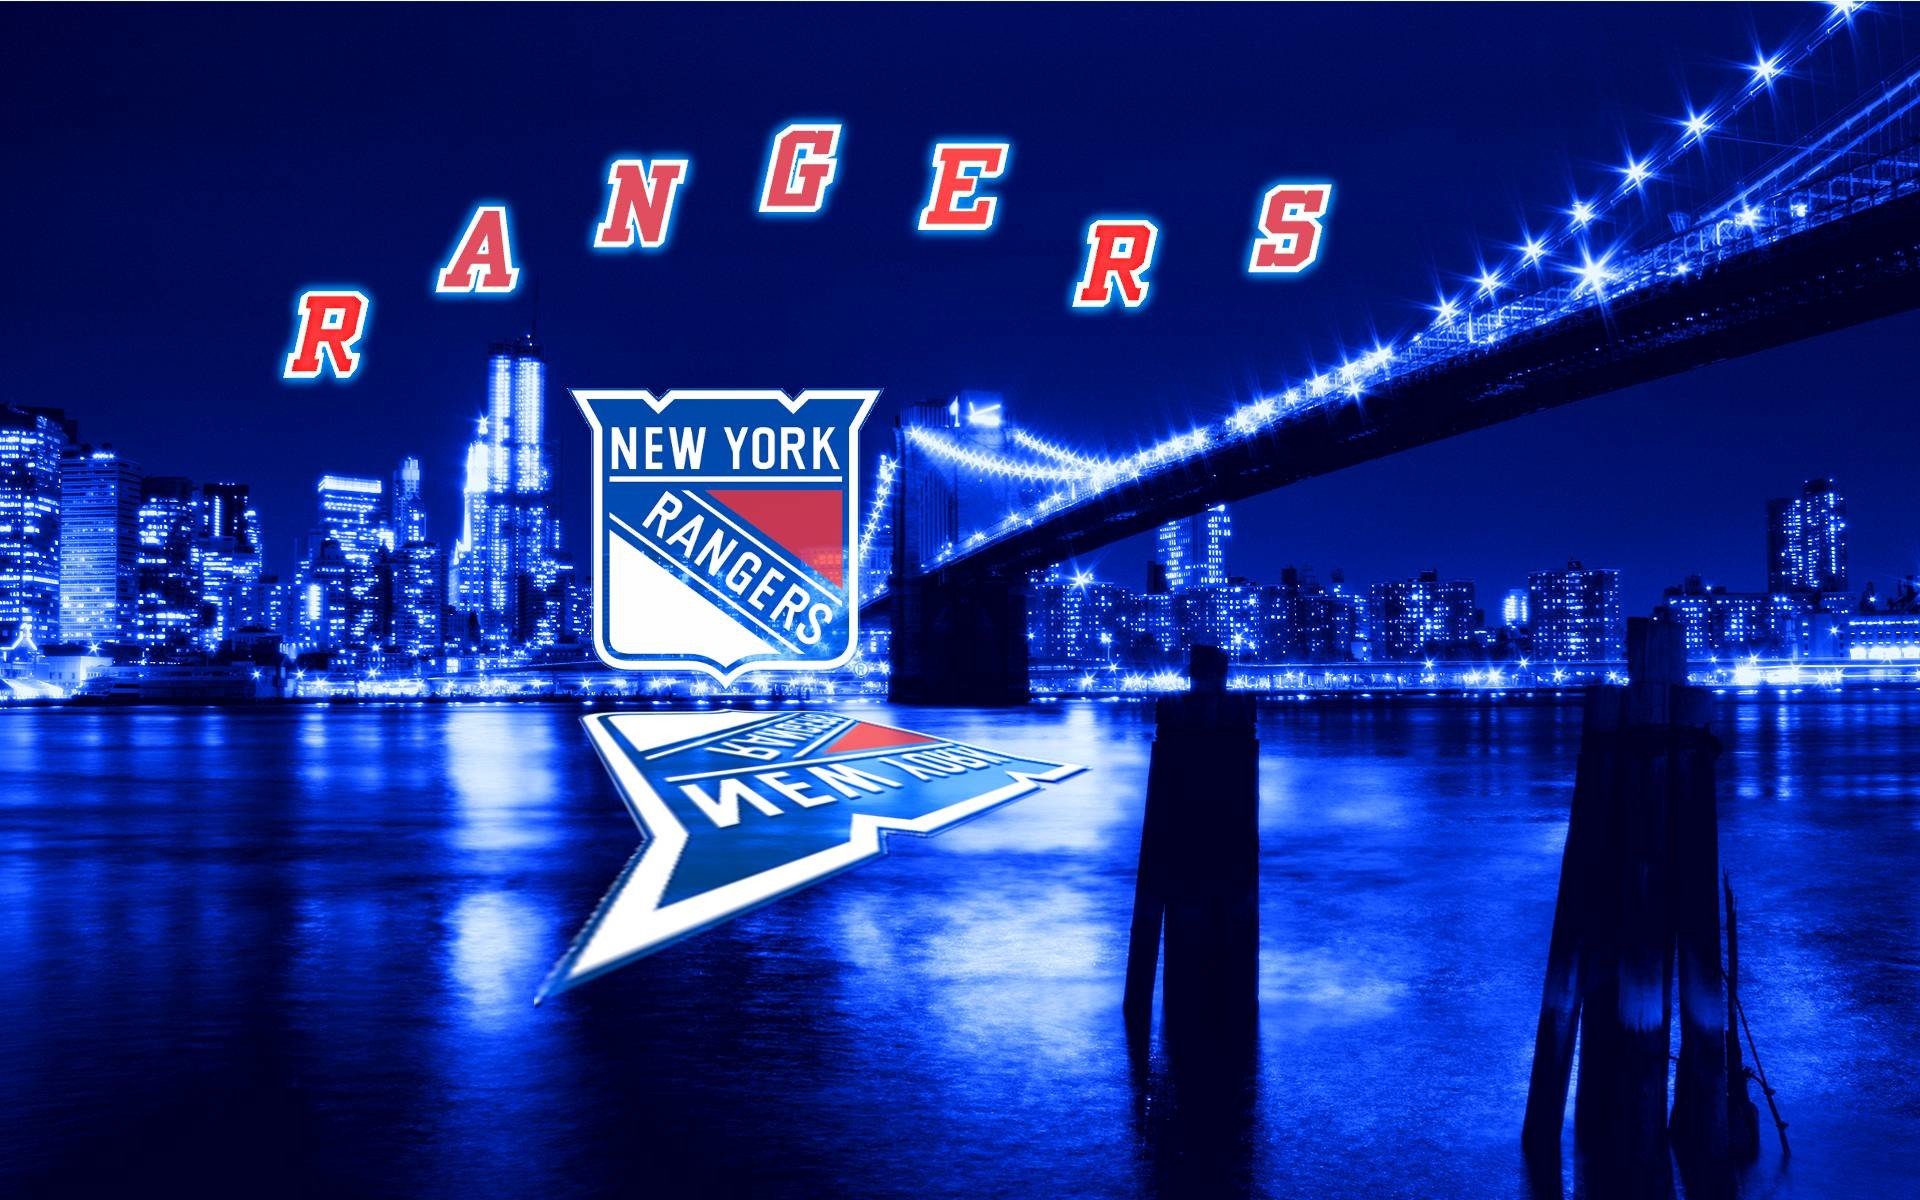 New York Rangers Wallpapers – Full HD wallpaper search